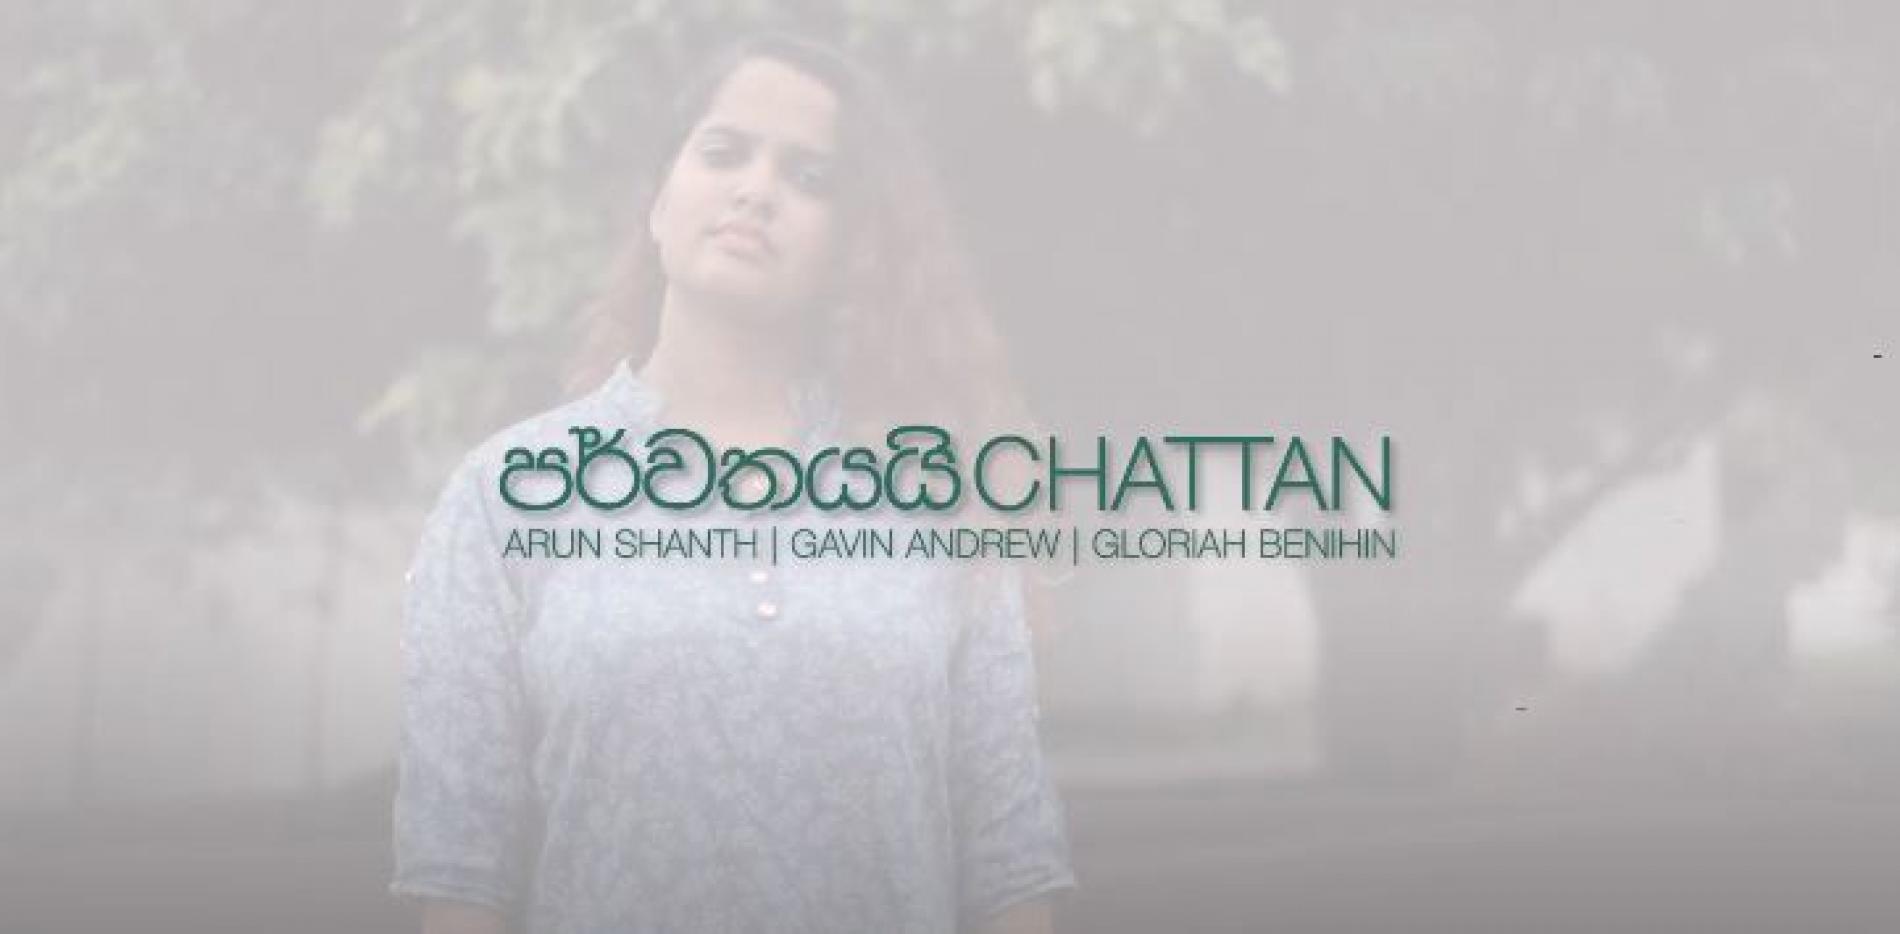 New Music : Chattan | Parwathayai | Sinhala Version – Arun Shanth | Gavin Andrew | Gloriah Benihin